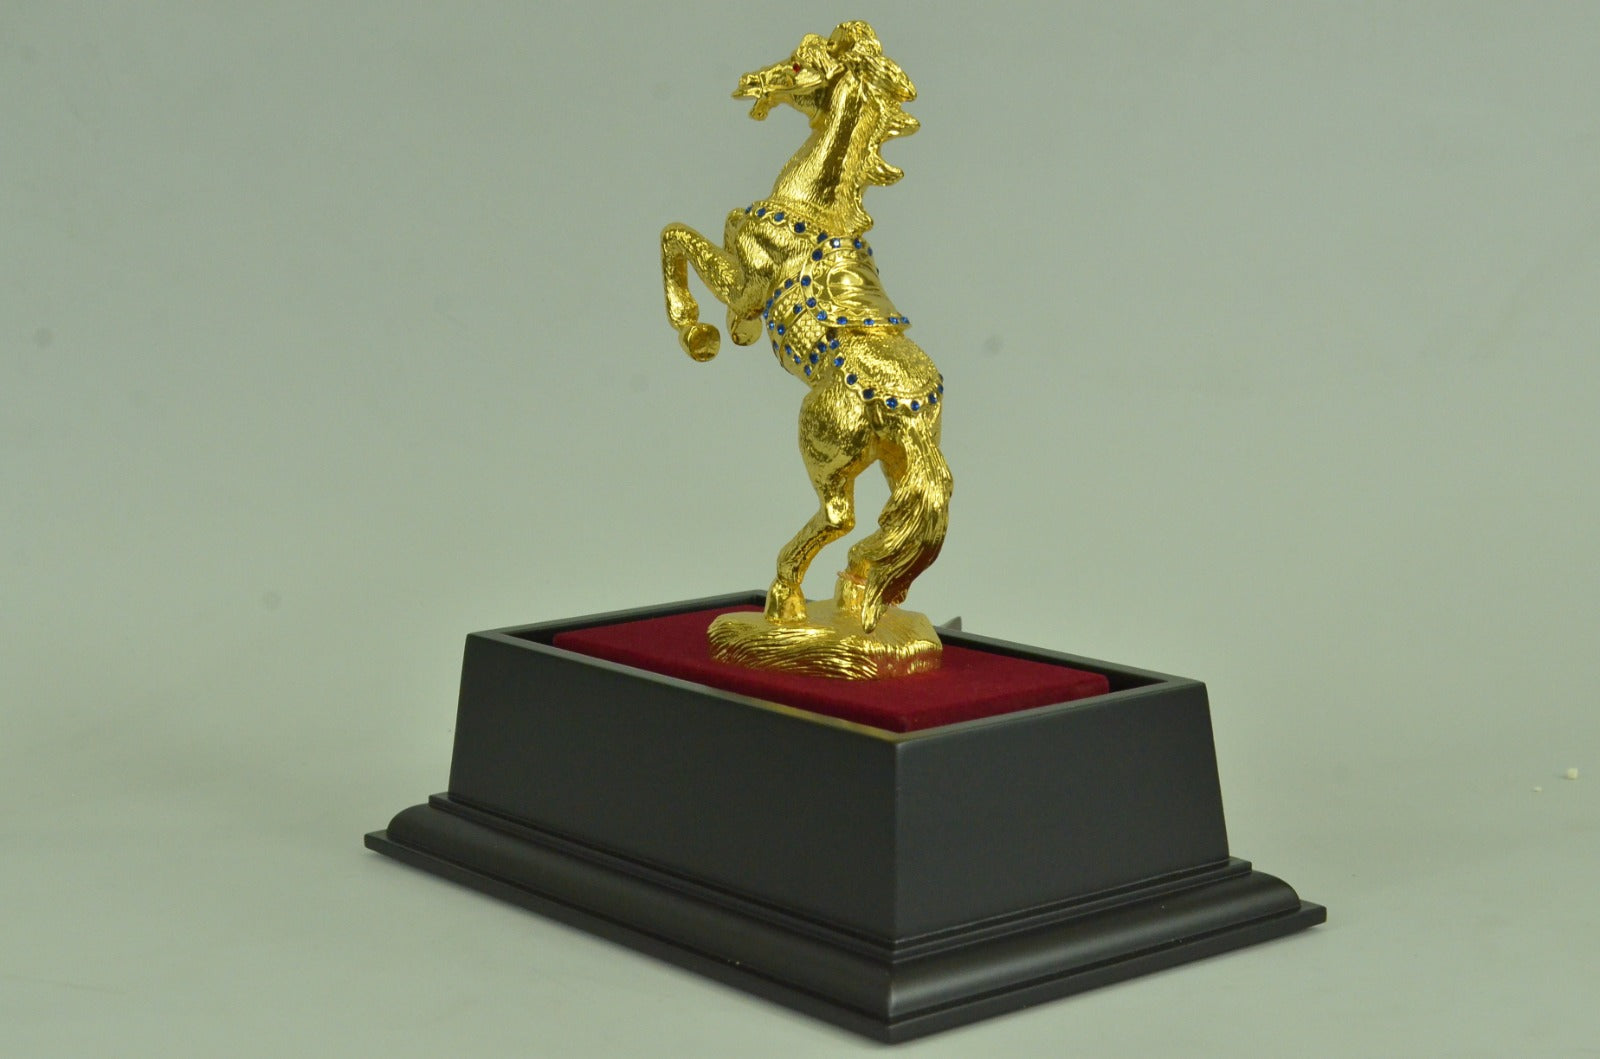 Hand Made Wild Horse Trophy Award 24K Gold Bronze Figurine Figure